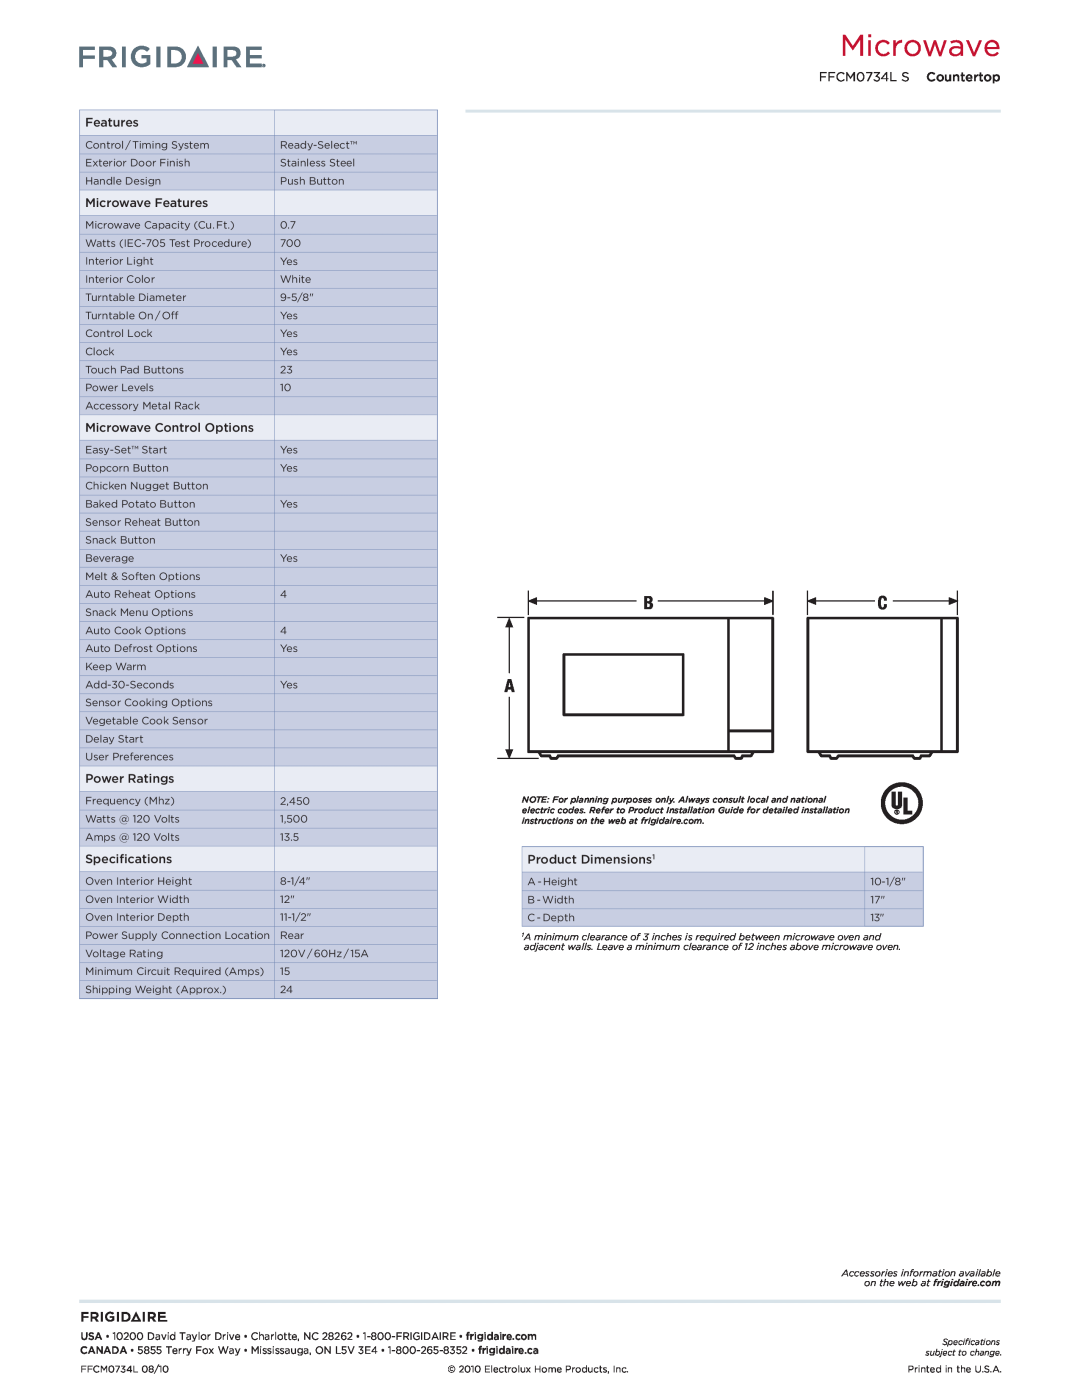 Frigidaire dimensions Microwave, FFCM0734L S Countertop 